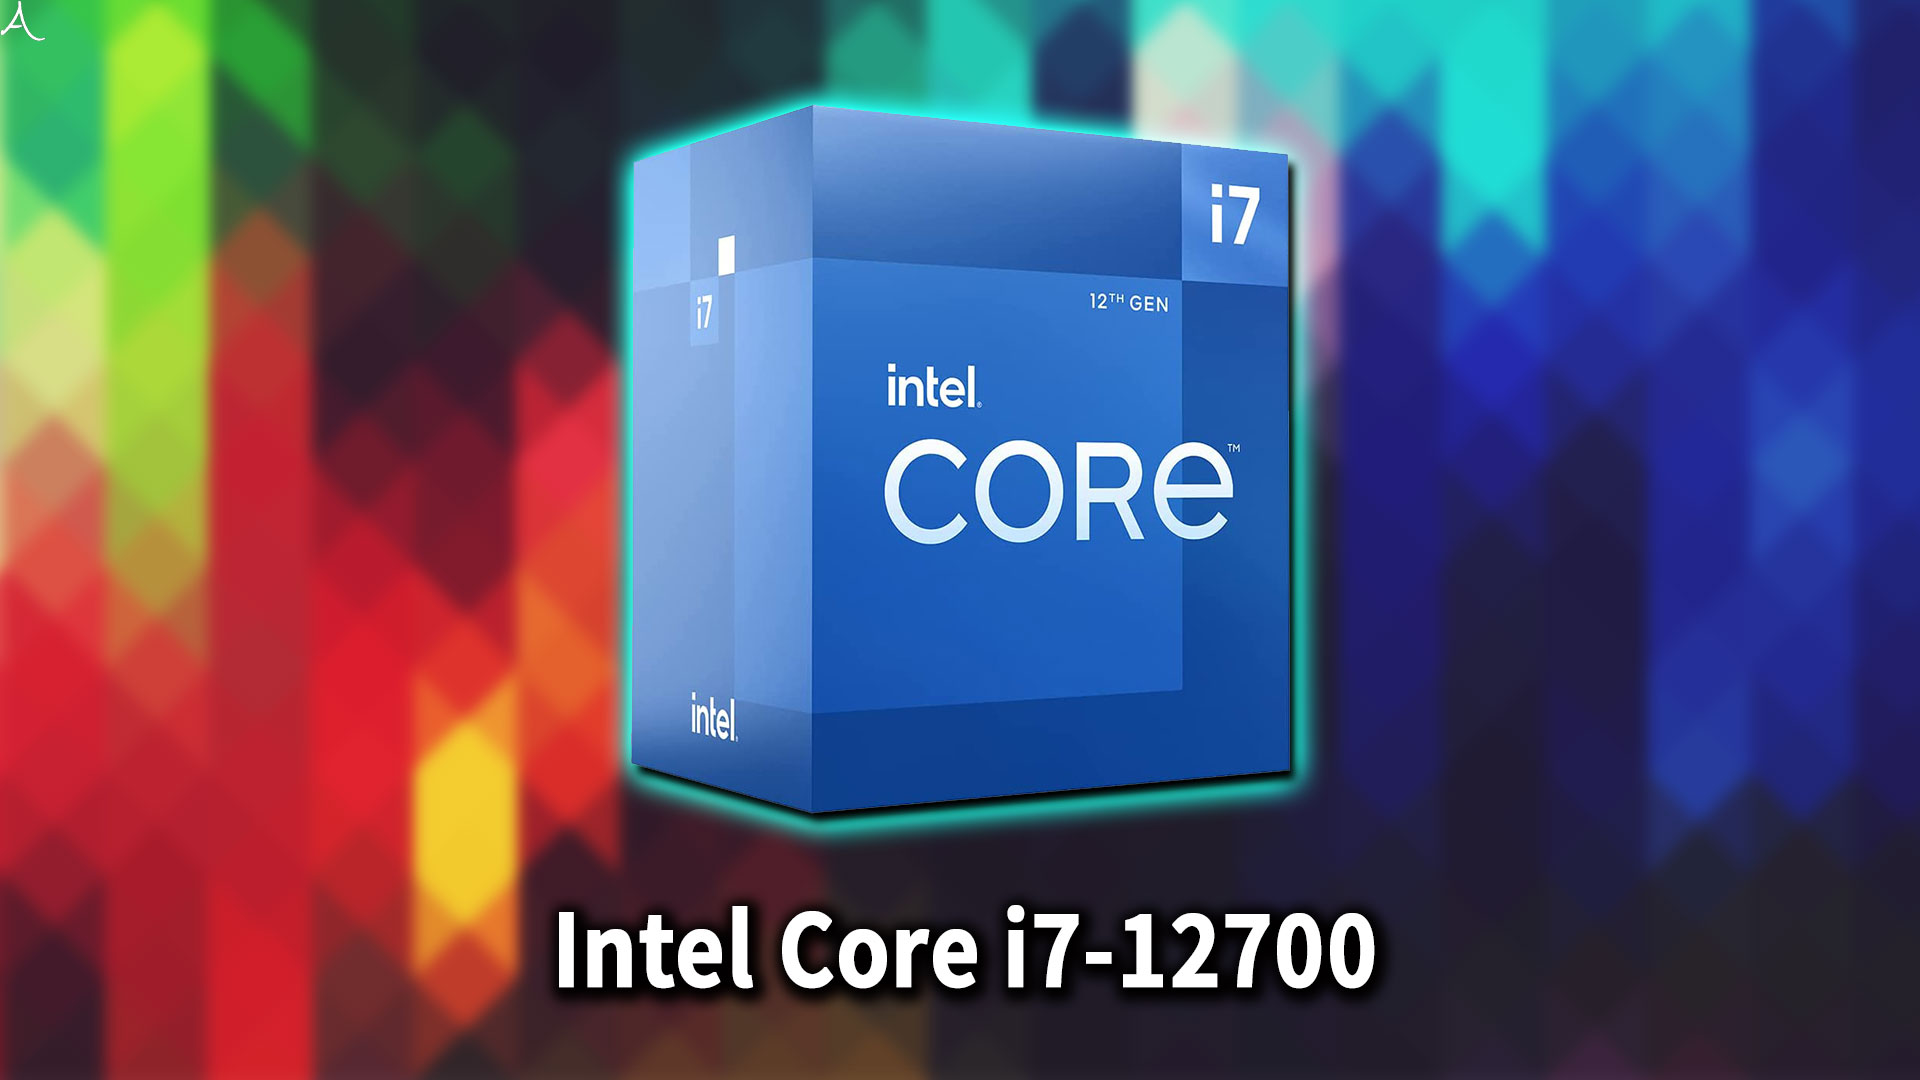 ｢Intel Core i7-12700｣の消費電力は？おすすめの電源容量はどれくらい？